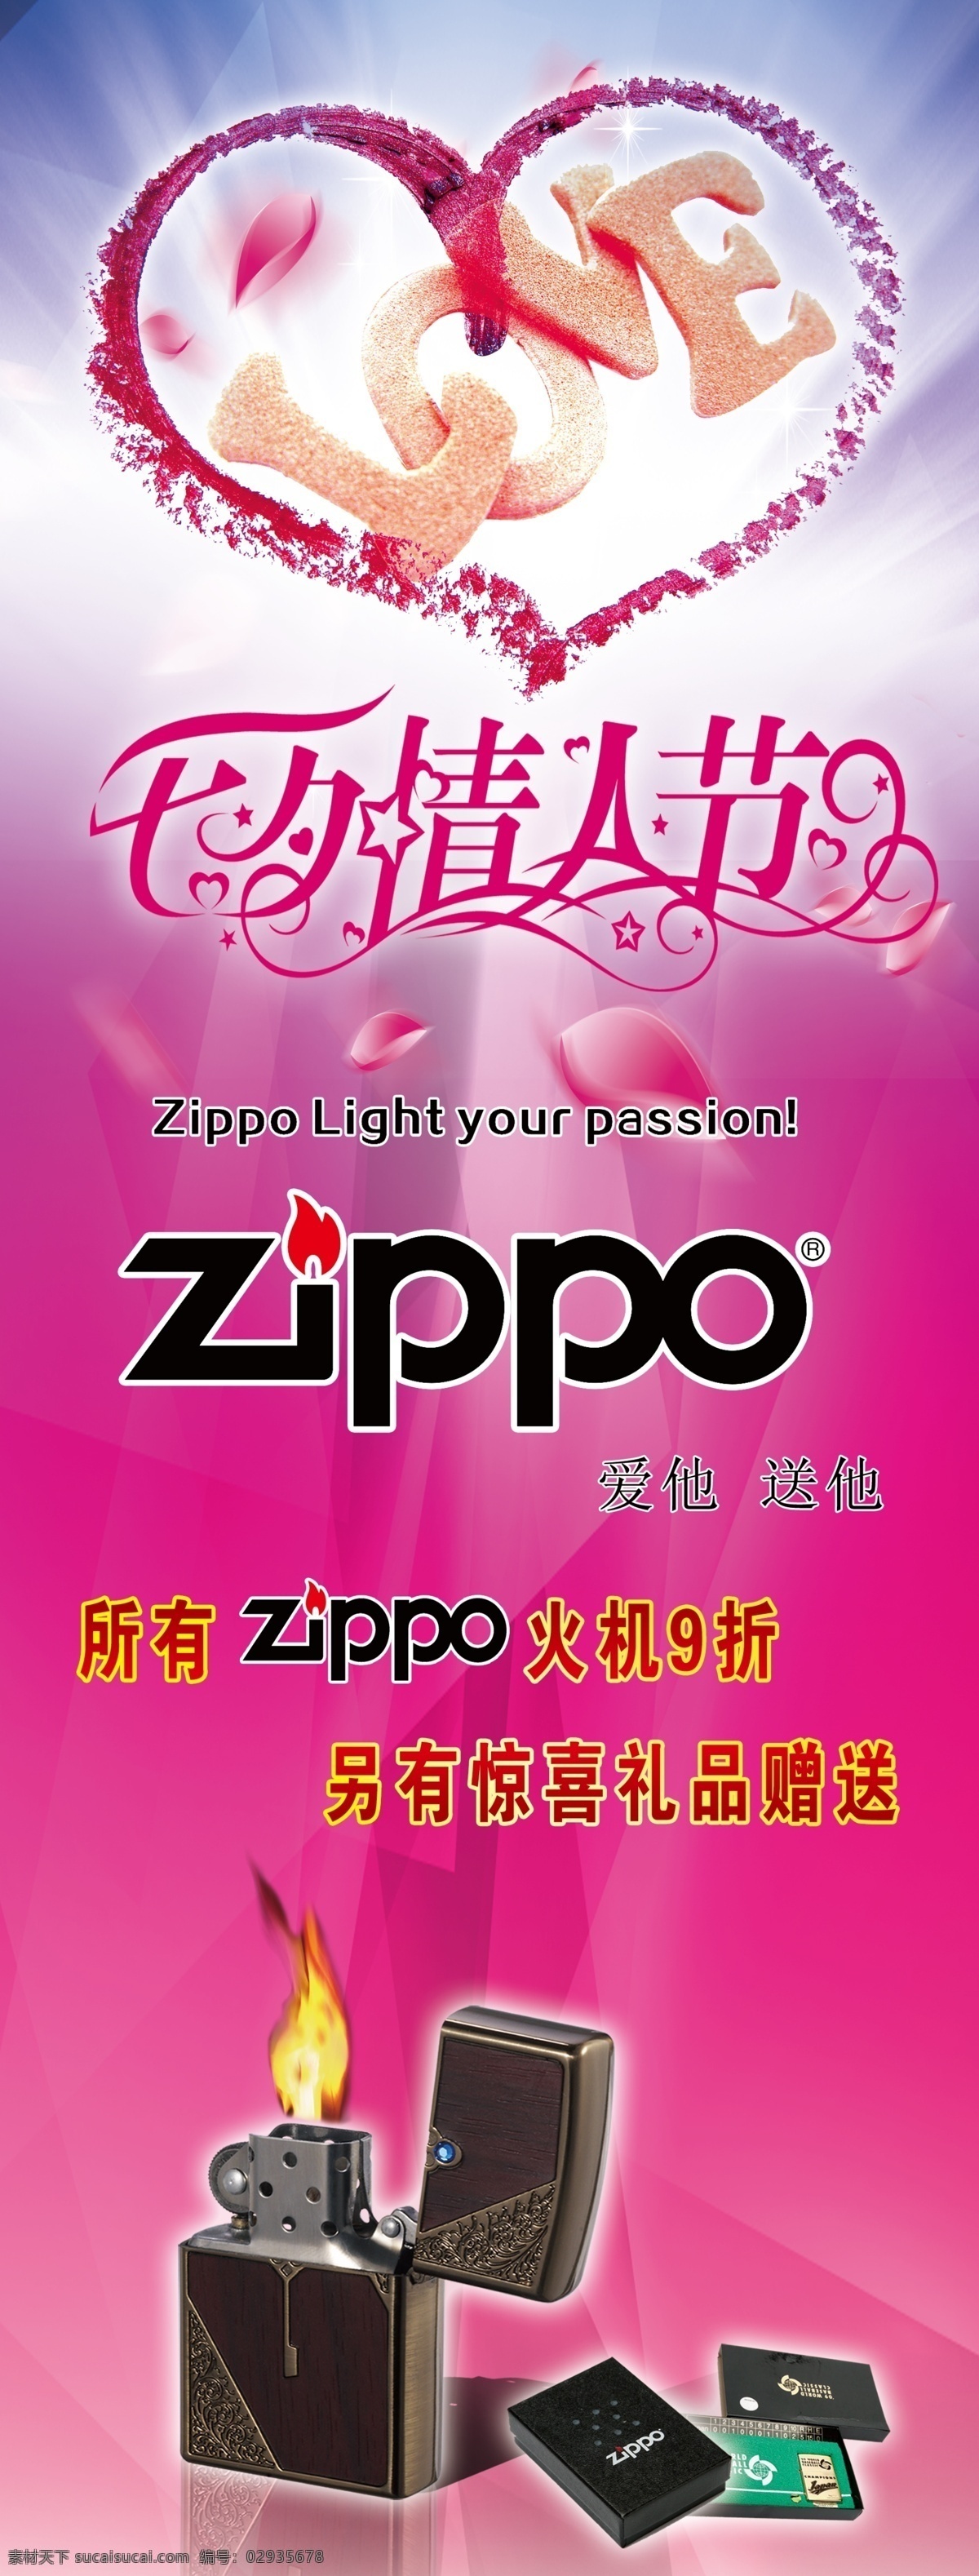 zippo 打火机 七夕 情人节 促销 粉色背景 ps原素材 紫色